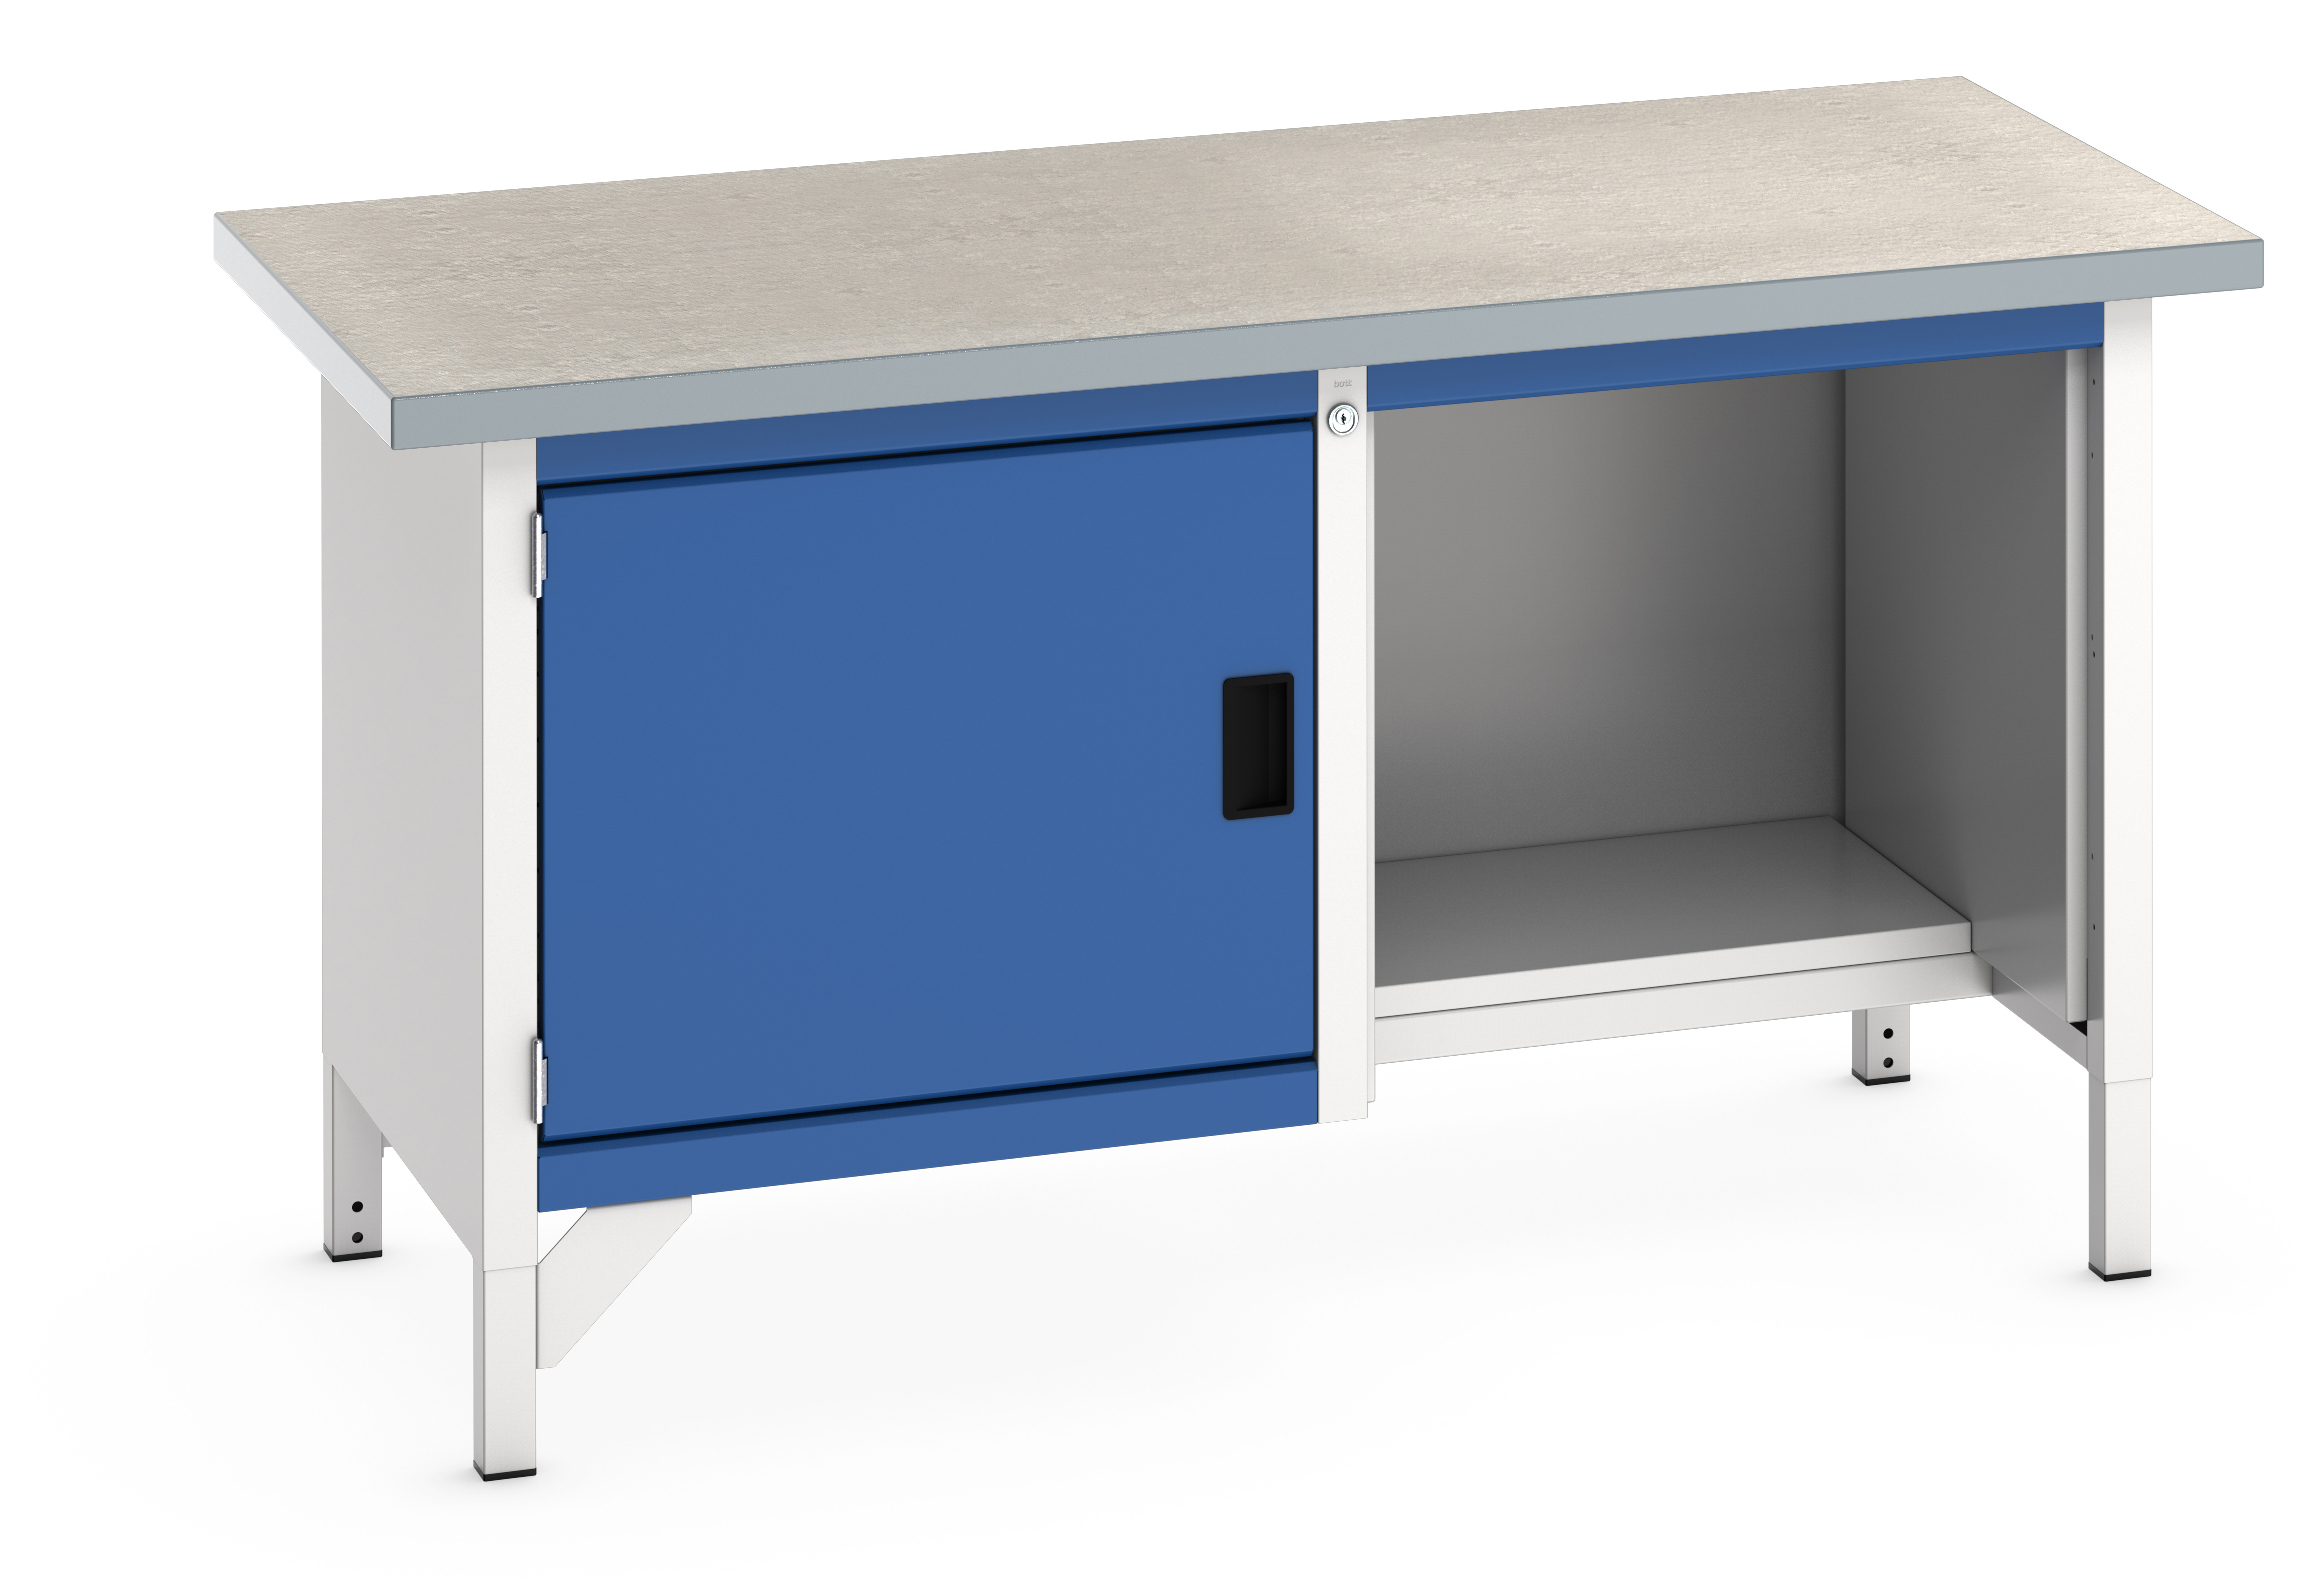 Bott Cubio Storage Bench With Full Cupboard / Open With Half Depth Base Shelf - 41002036.11V